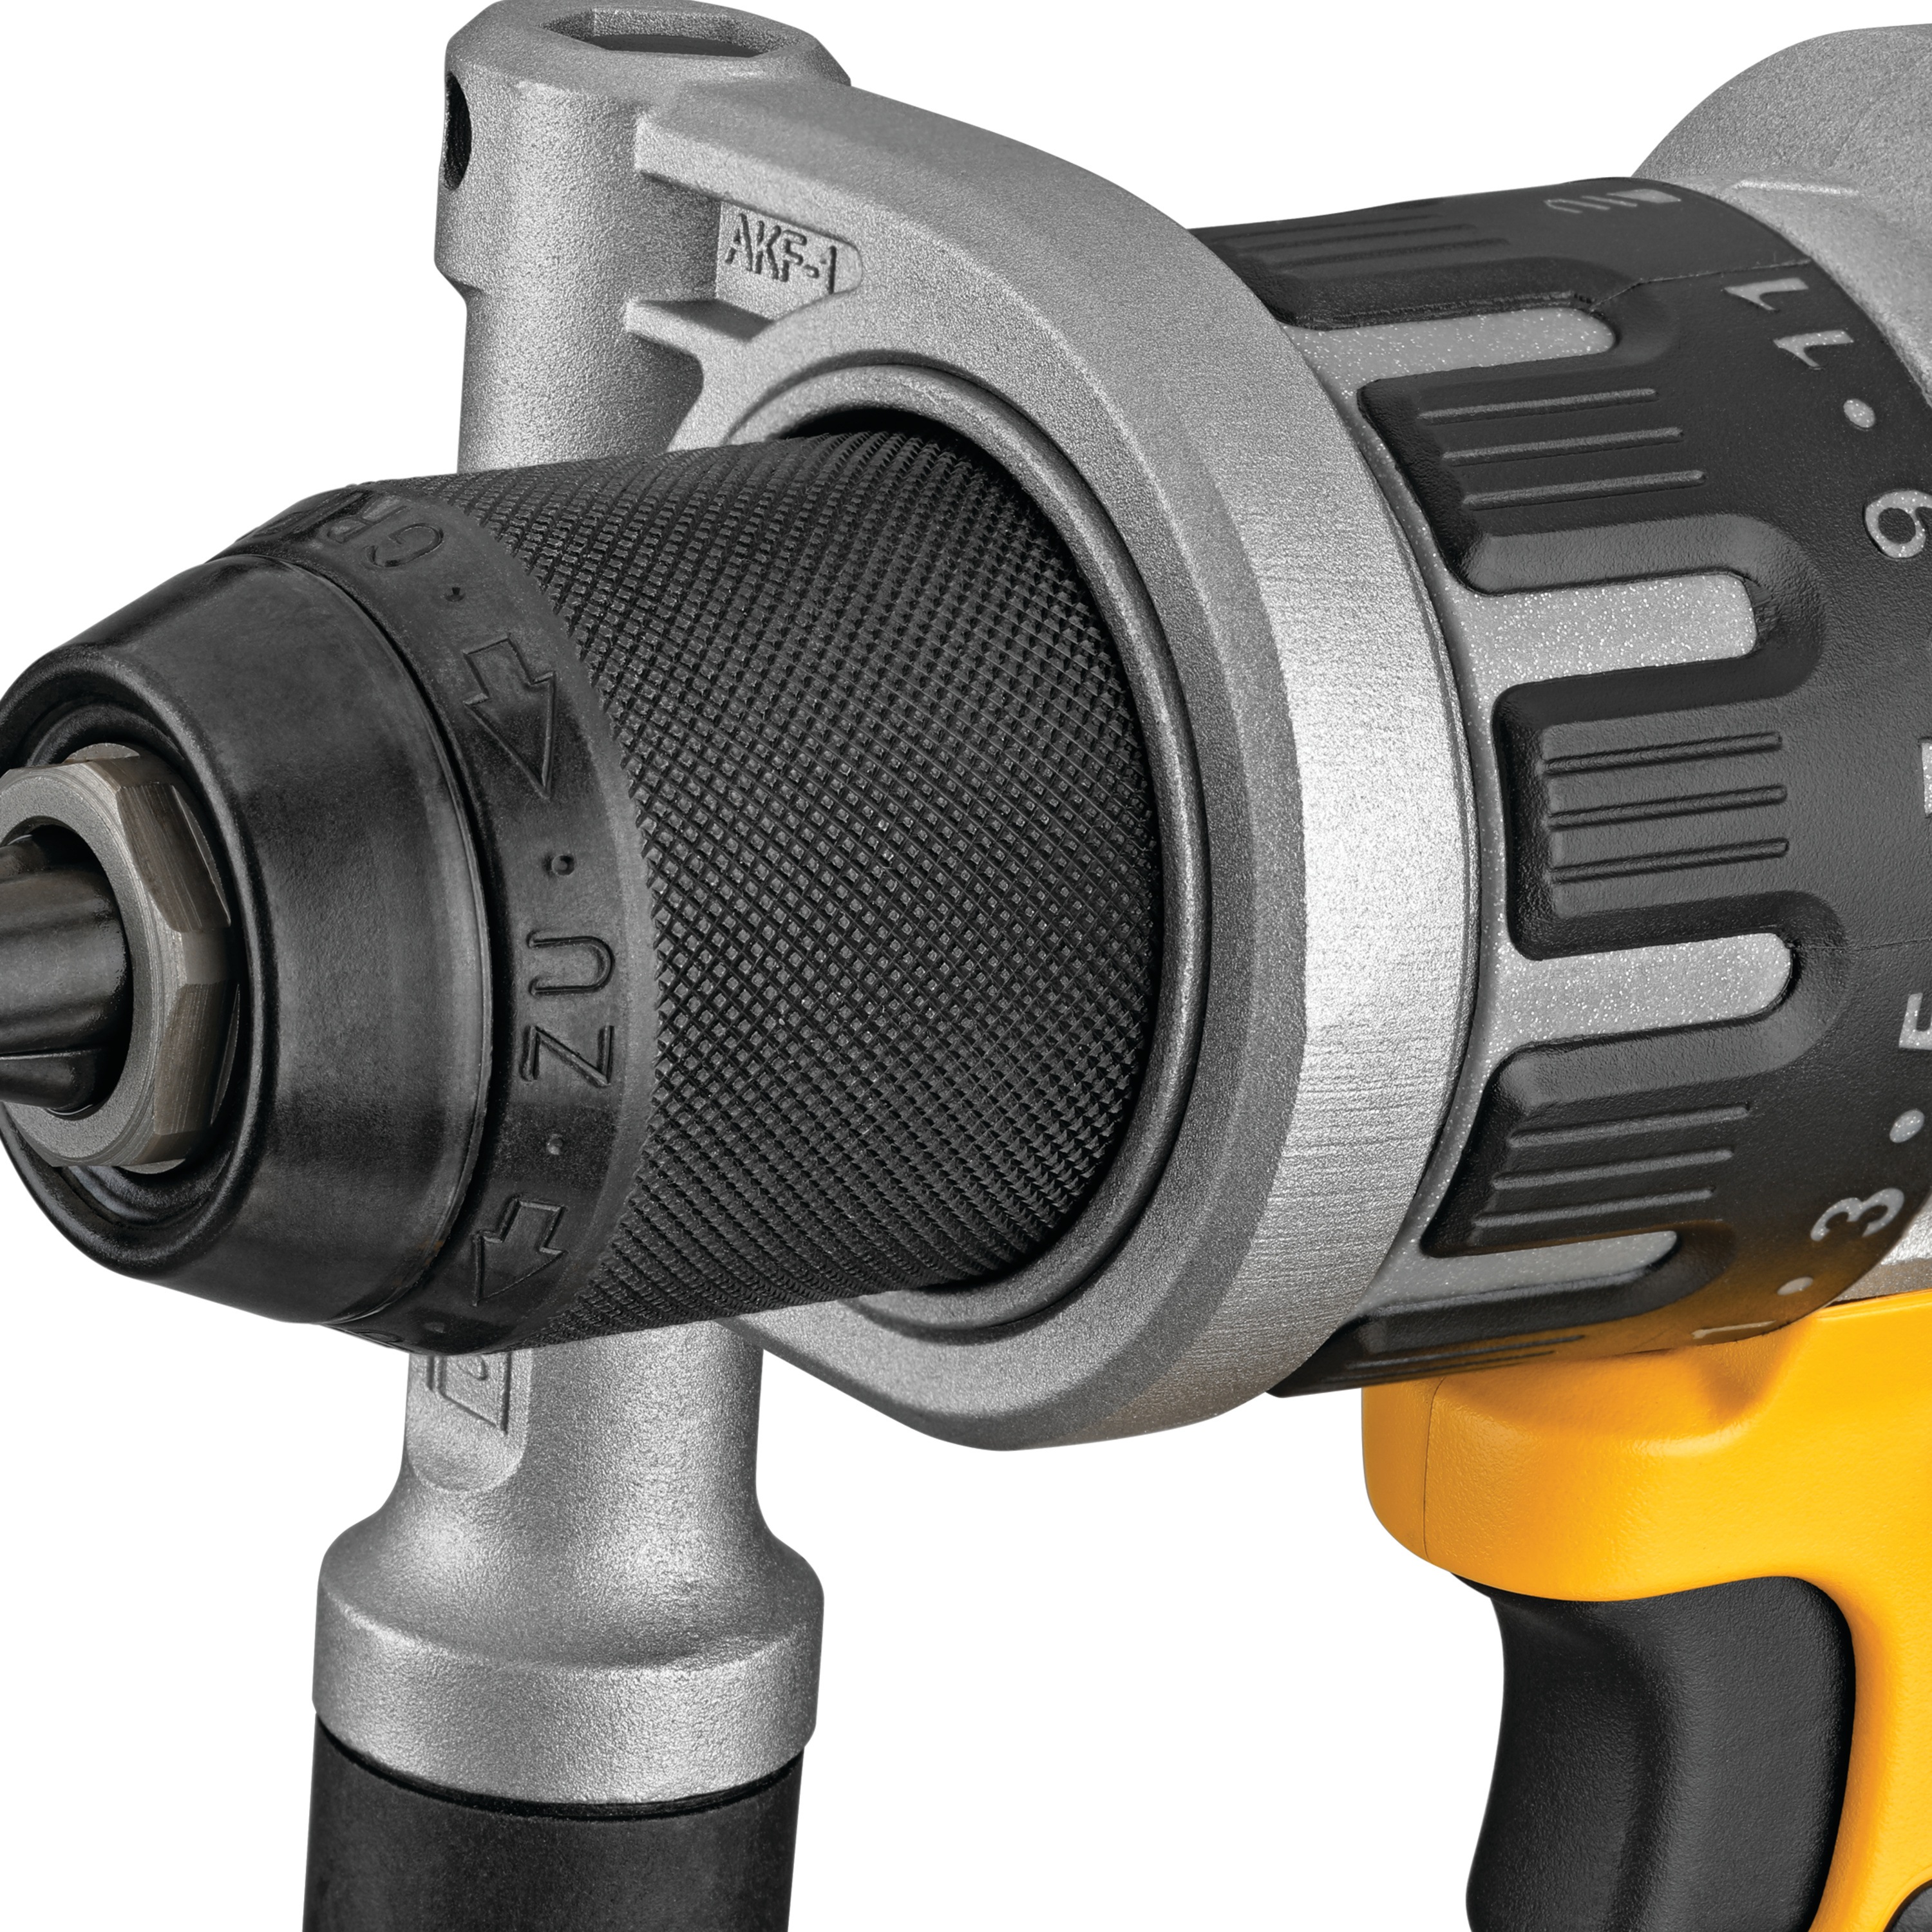 DEWALT - 20V MAX XR 12 in Brushless Hammer DrillDriver With POWER DETECT Tool Technology Kit - DCD998W1